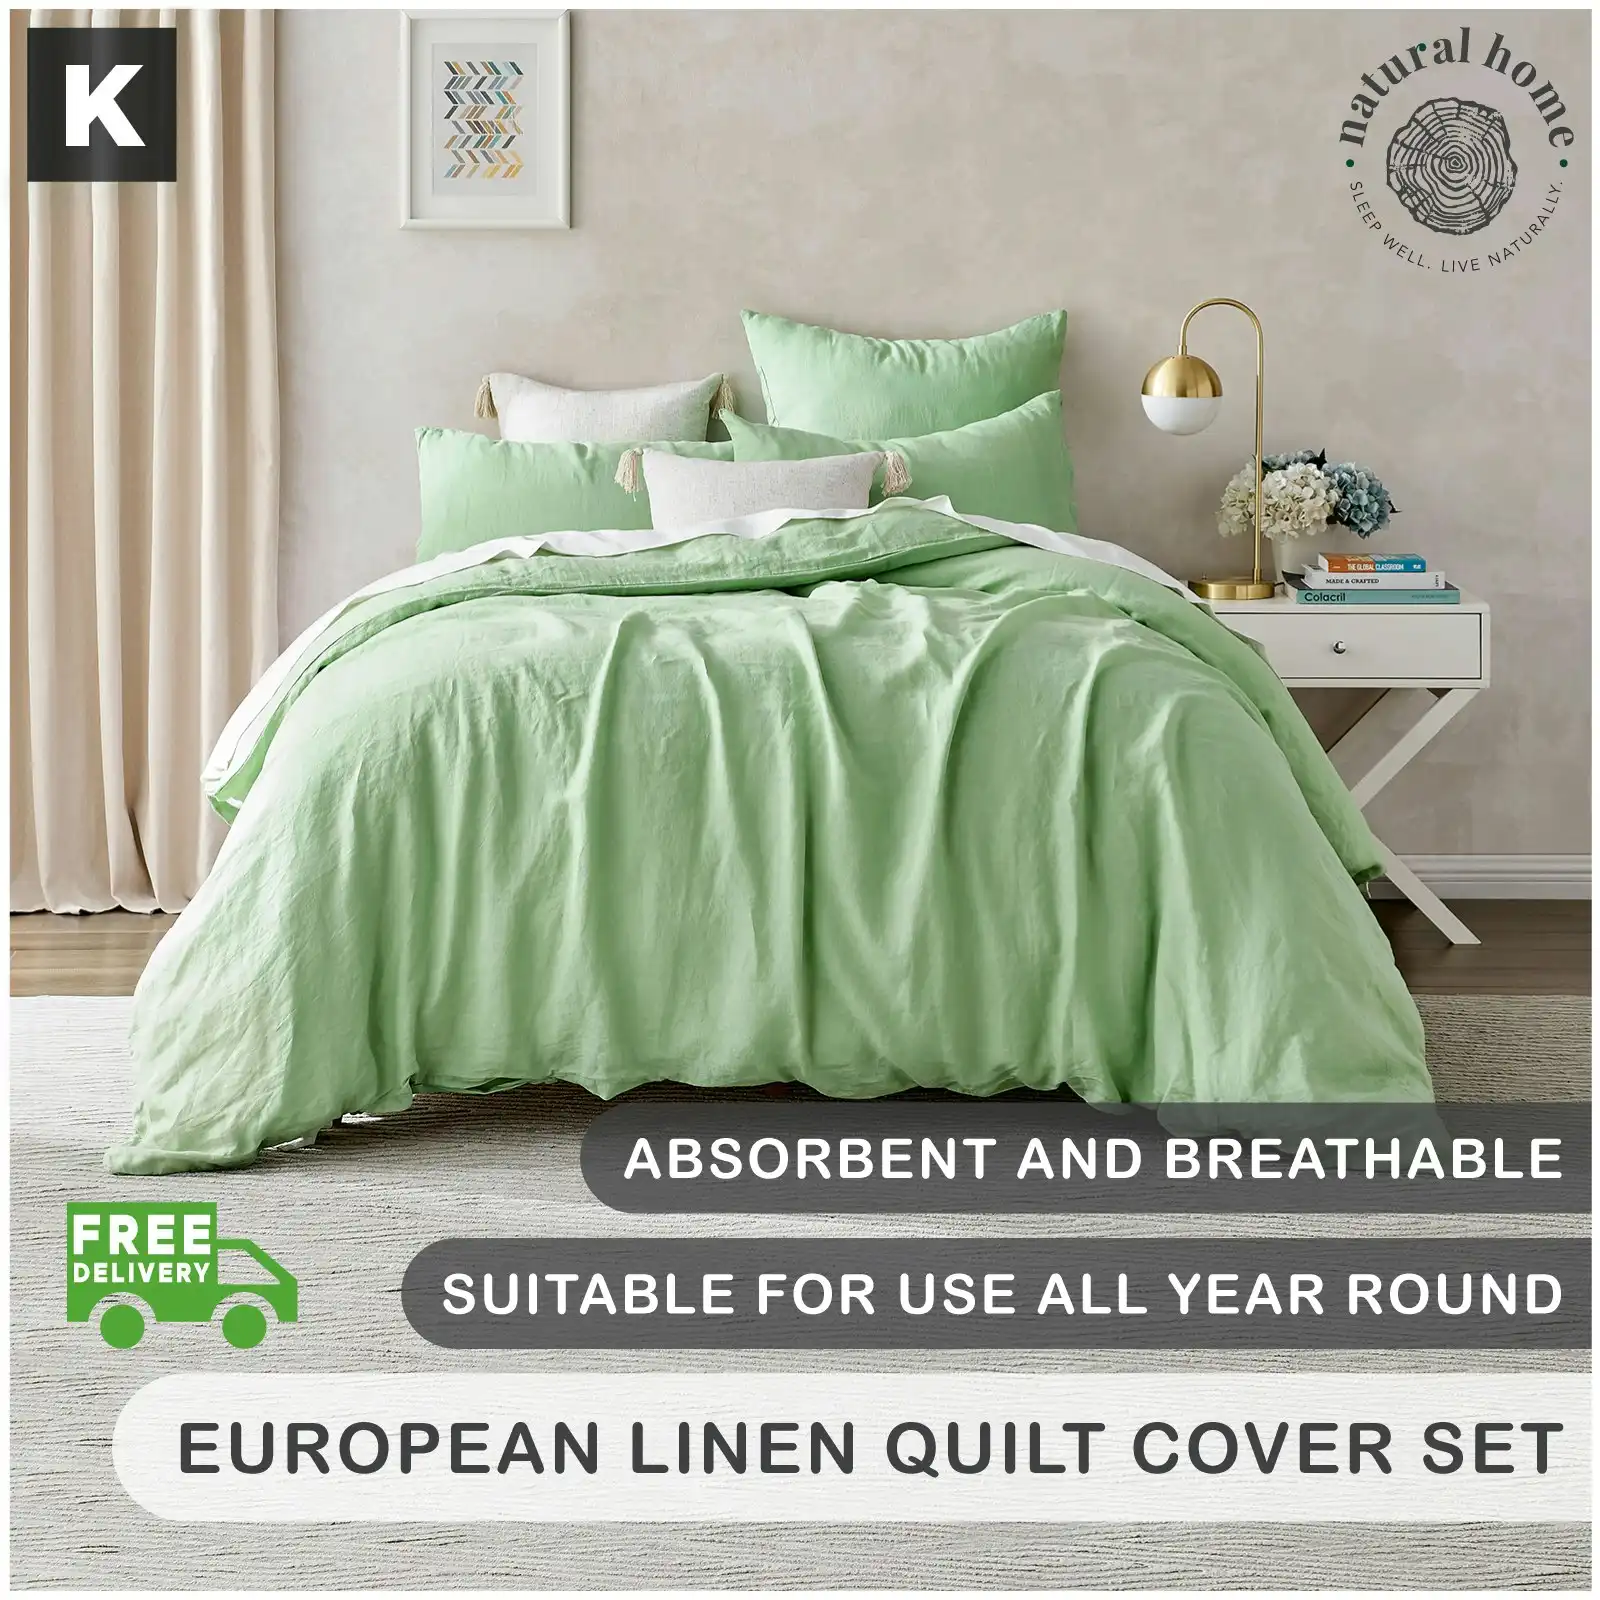 Natural Home Linen 100% European Flax Linen Quilt Cover Set - Sage - King Bed